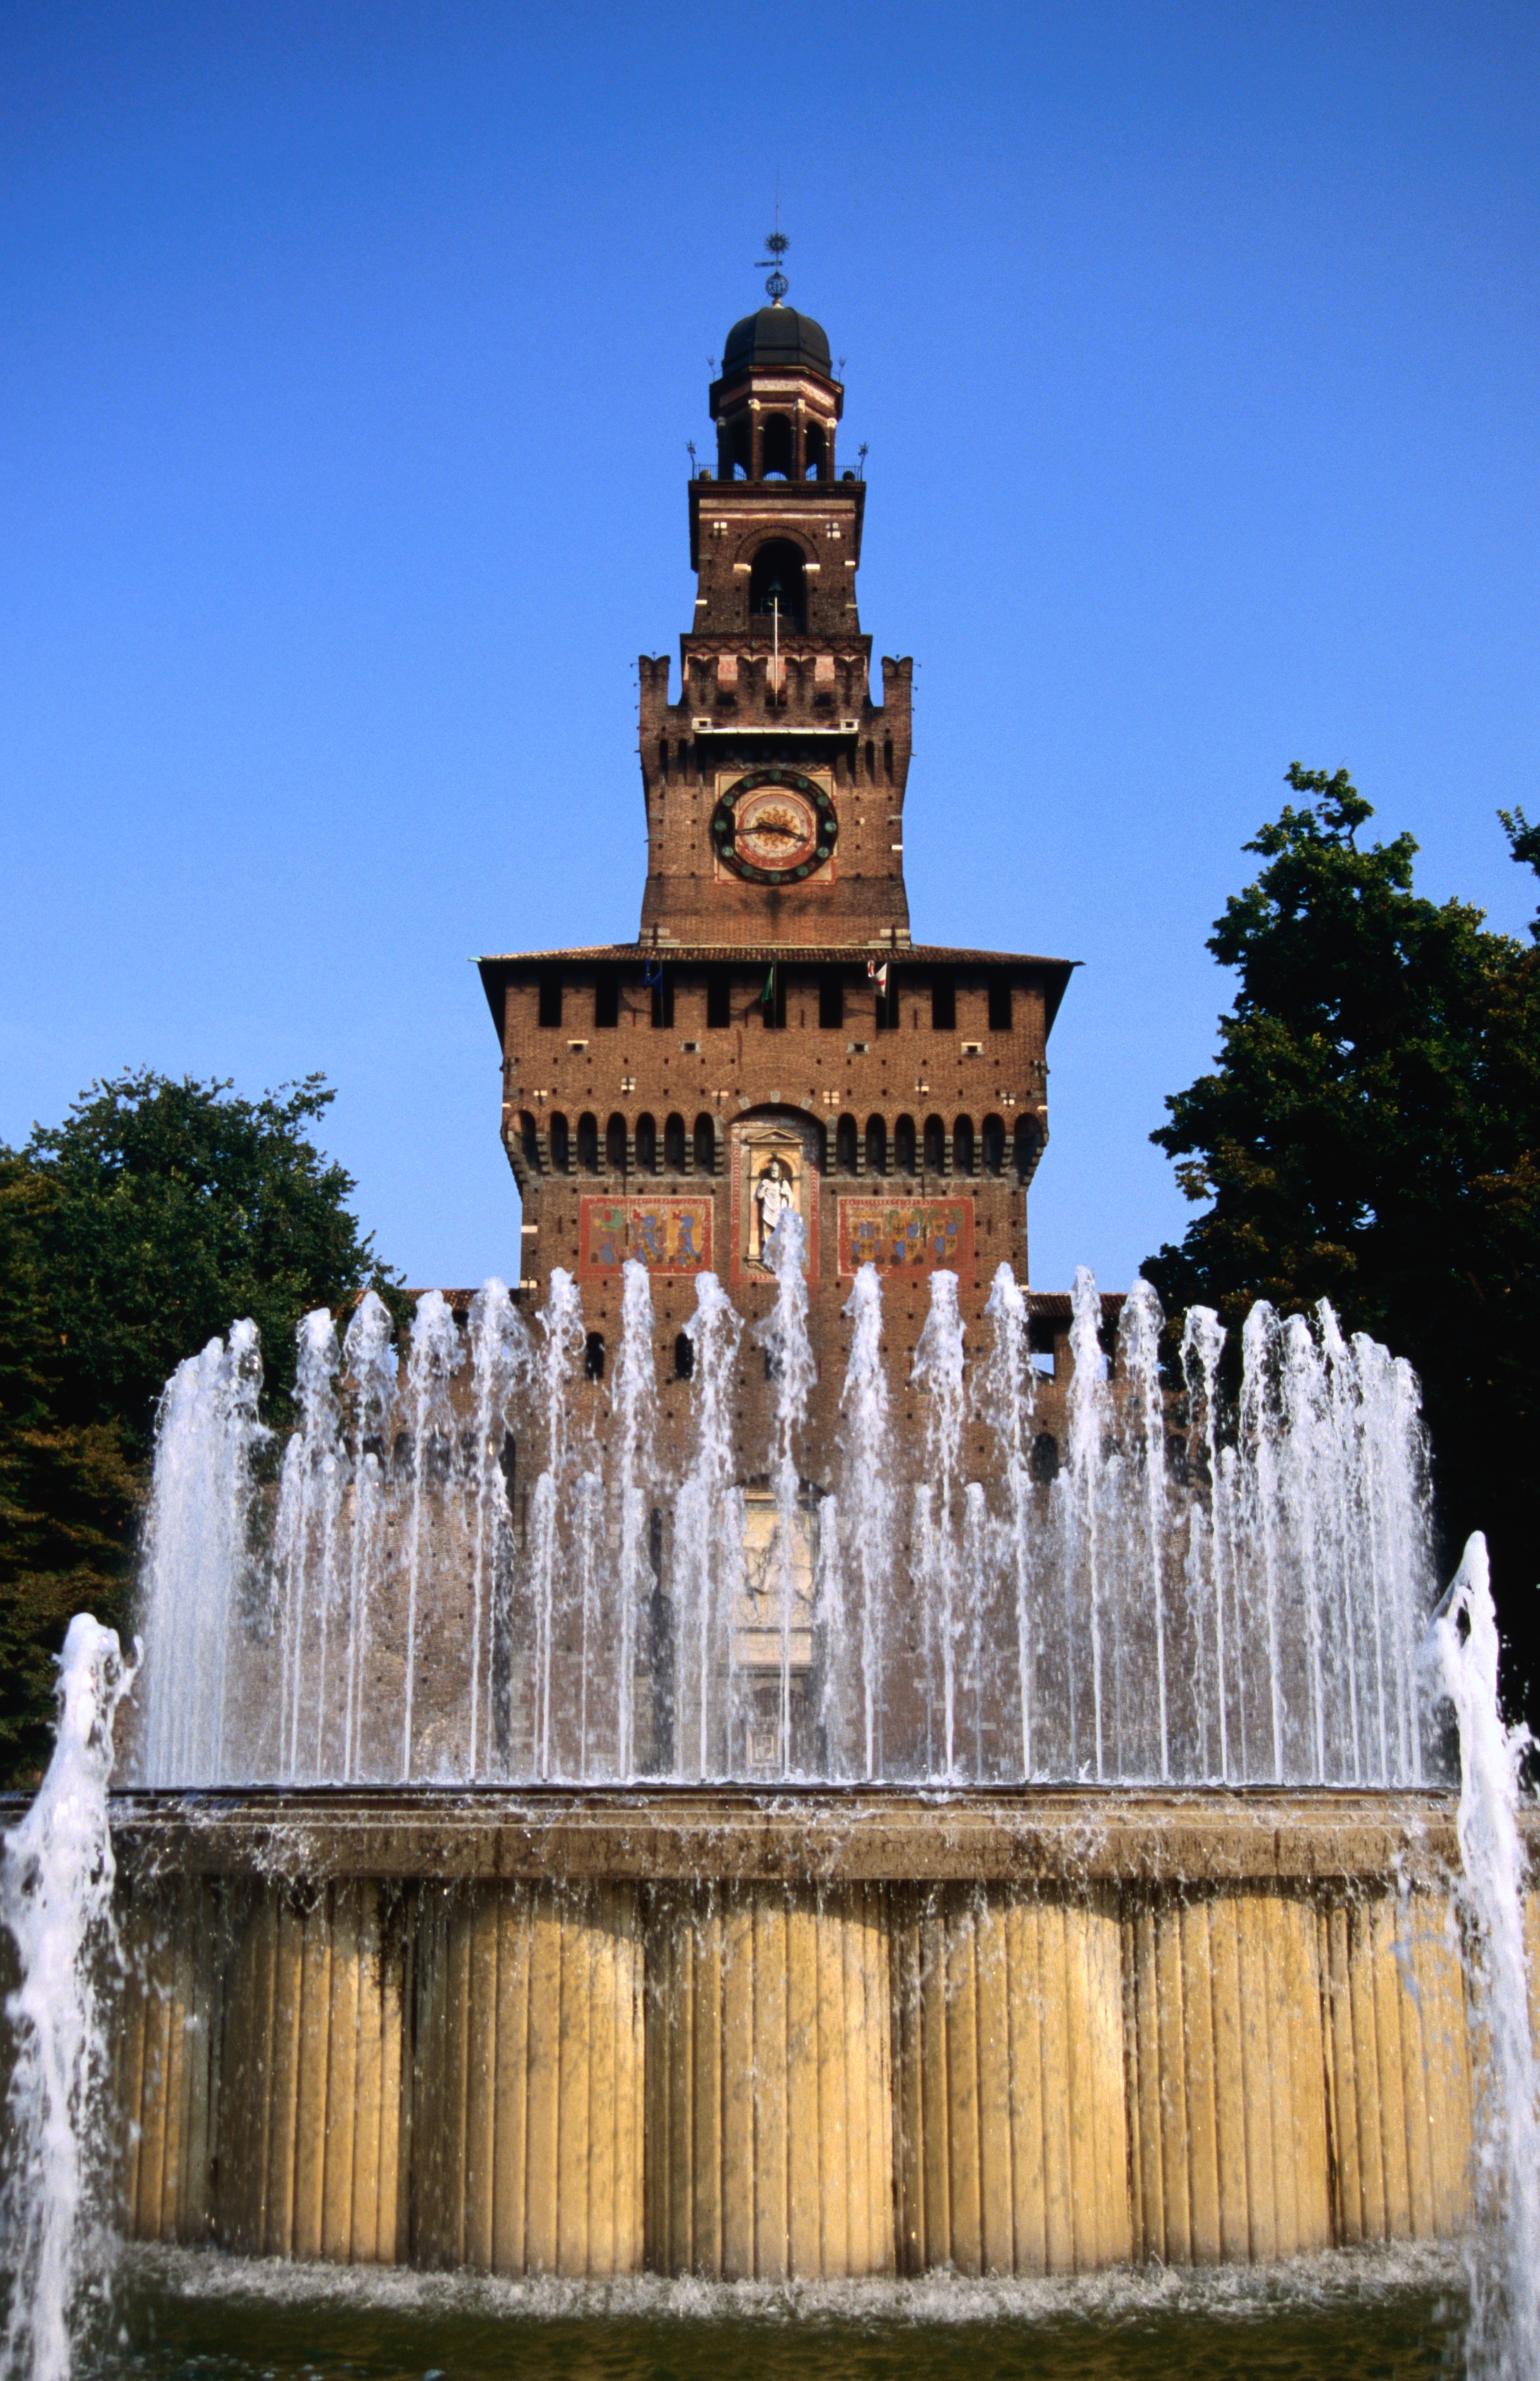 Castello Sforzesco | Milan, Italy Attractions - Lonely Planet